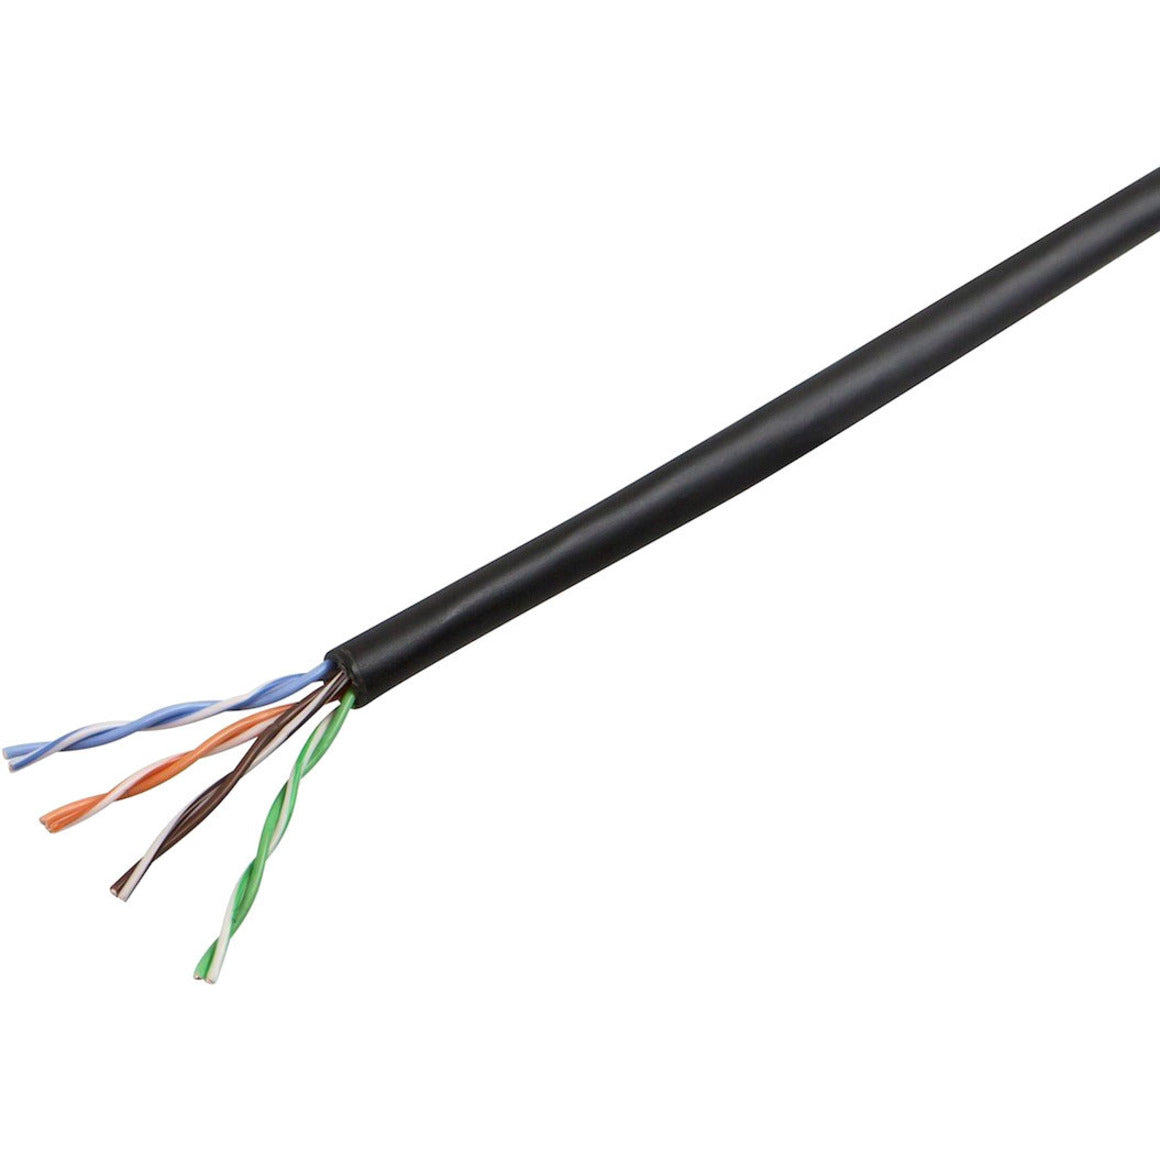 Monoprice 12806 Cat. 5e UTP Network Cable, 1000 ft, Black